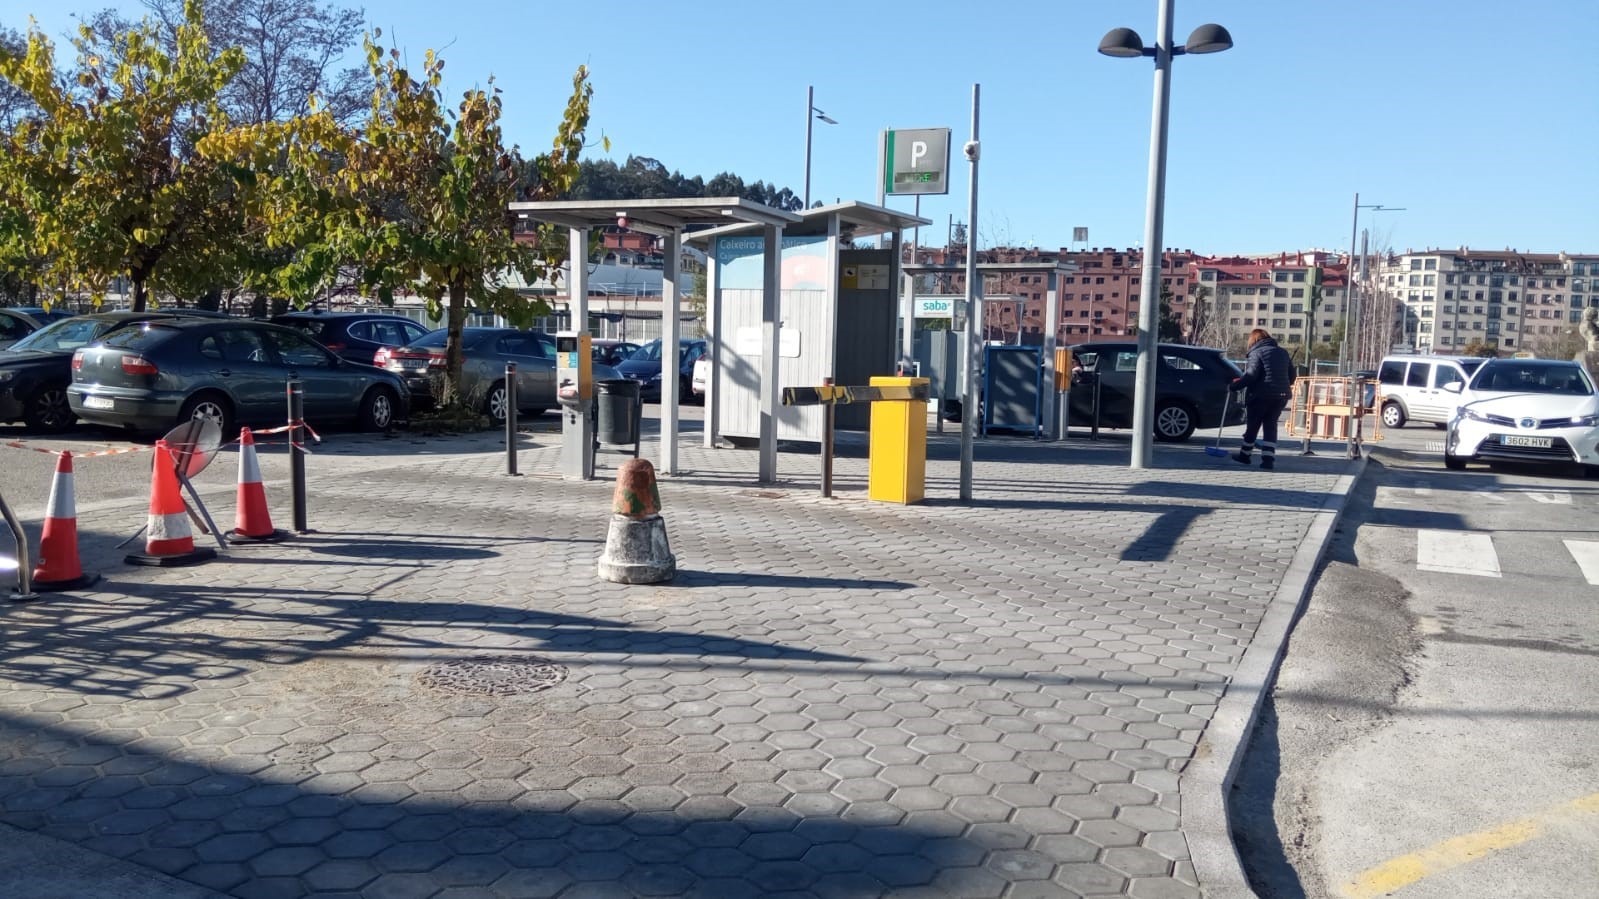 Parking Saba Pontevedra Train Station - Pontevedra